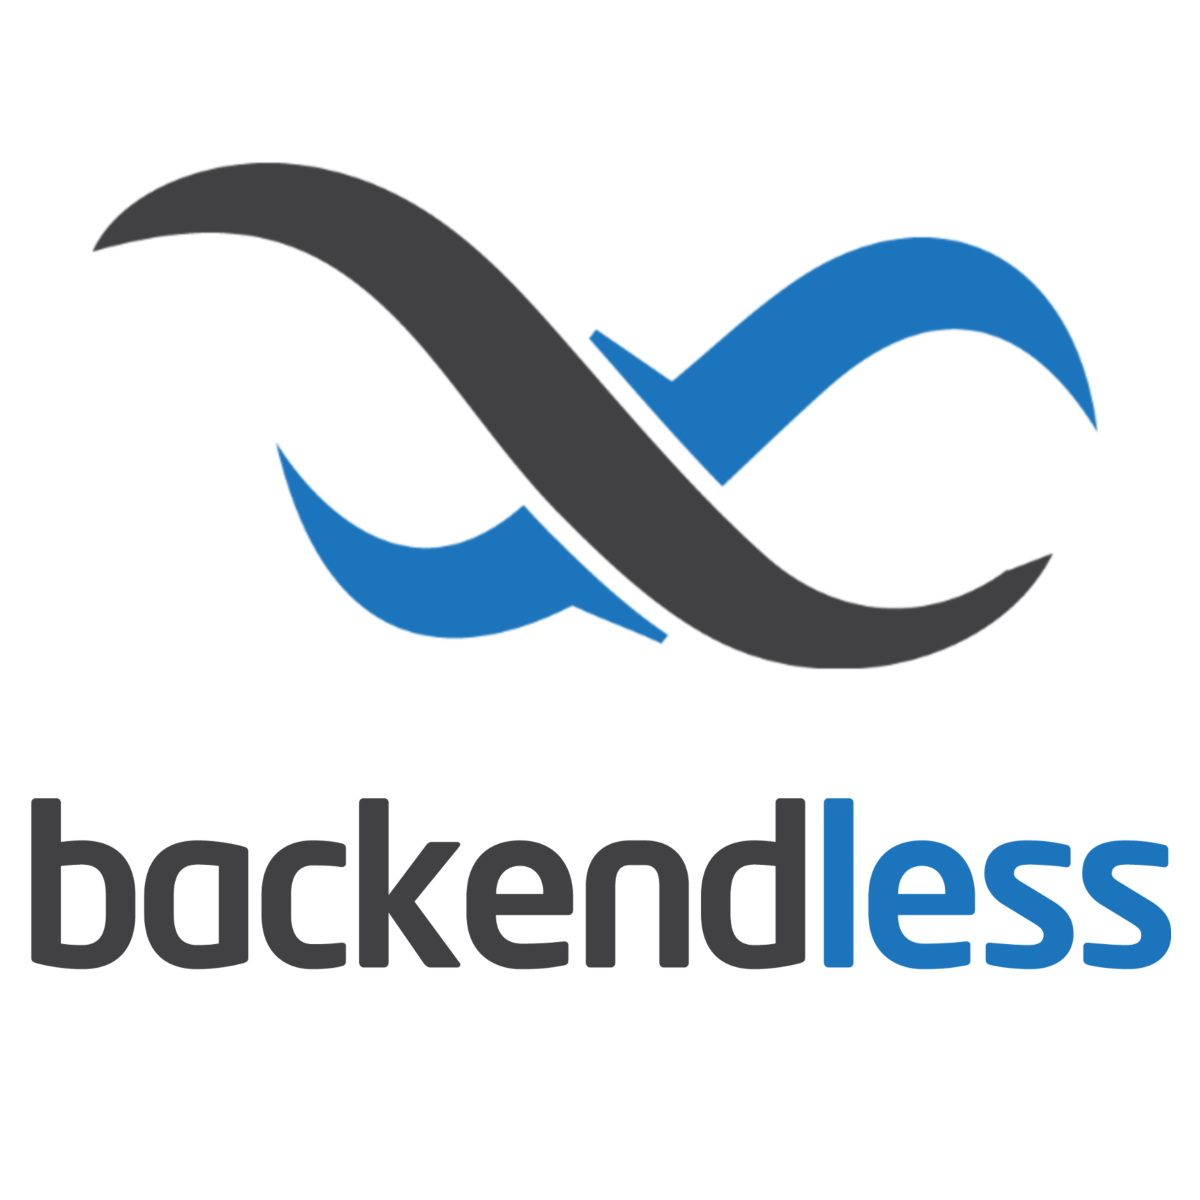 Backendless Logo